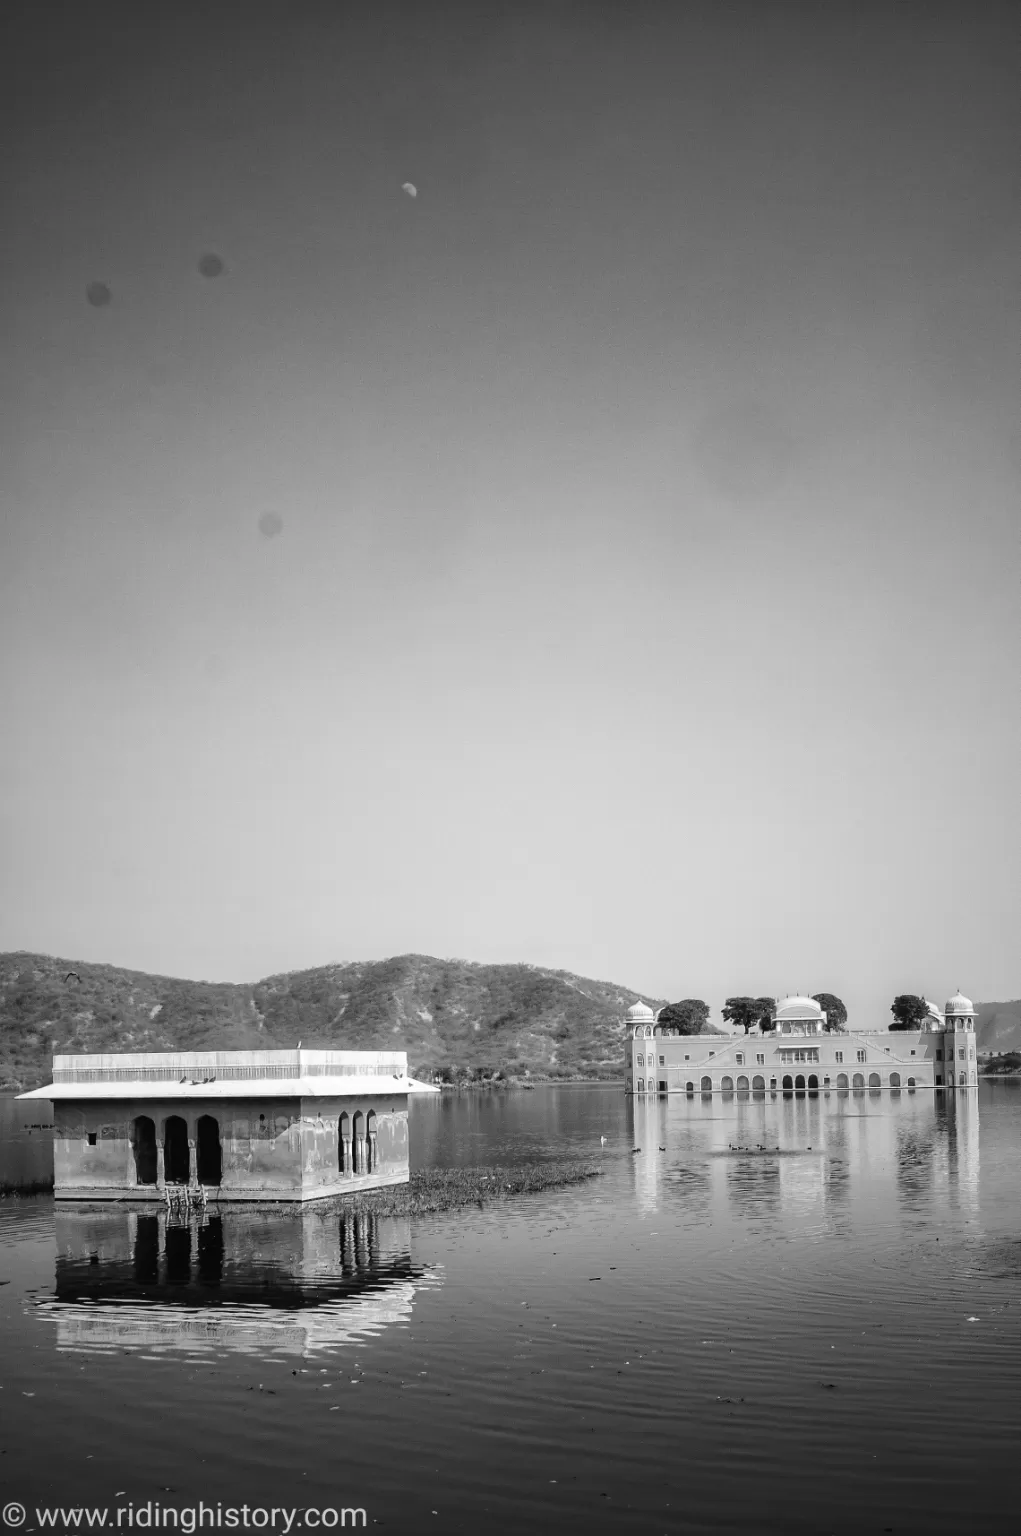 Photo of Jaipur By Yogesh Chandra Joshi